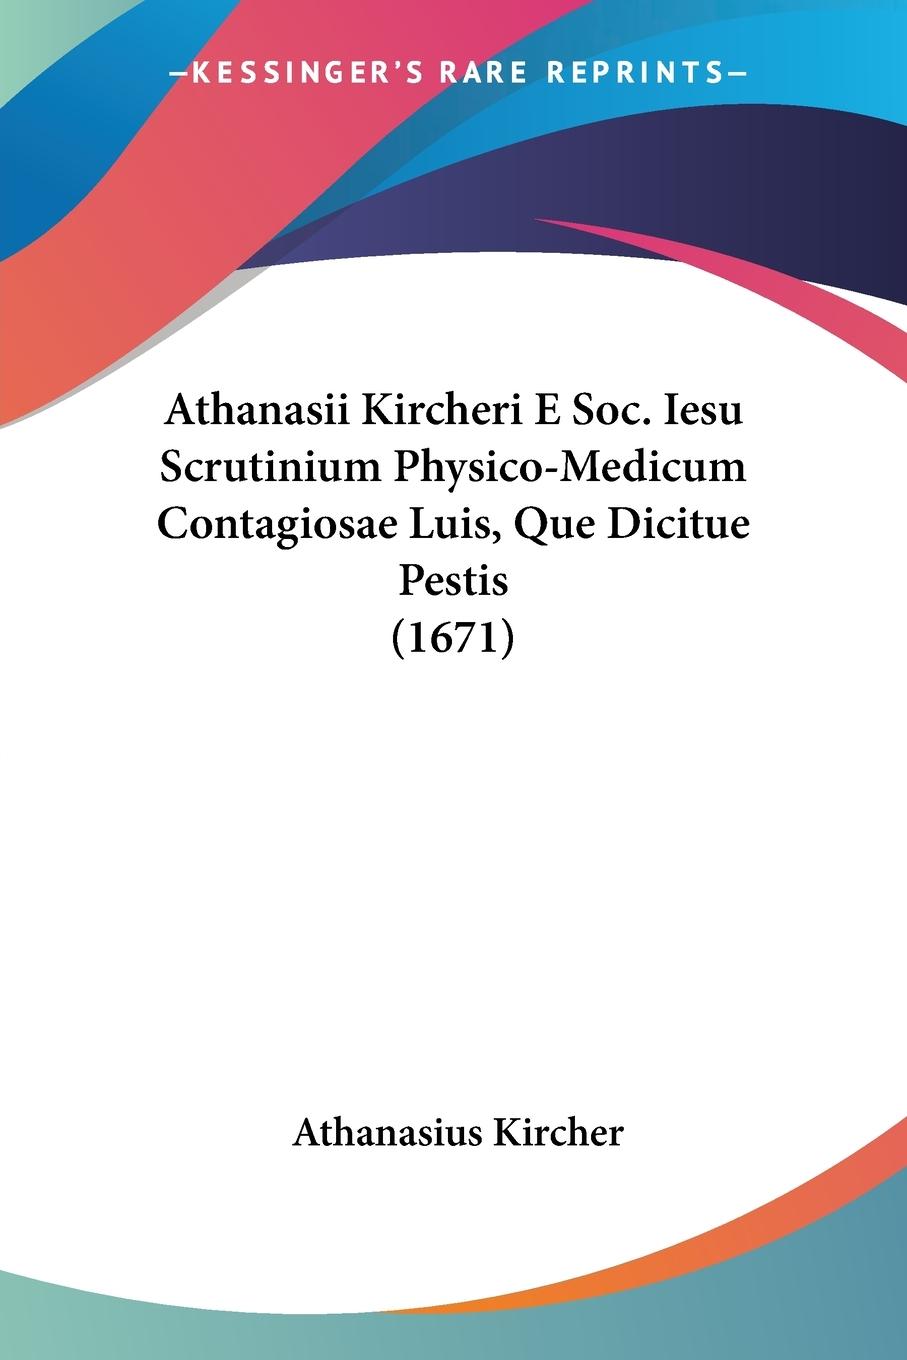 Athanasii Kircheri E Soc. Iesu Scrutinium Physico-Medicum Contagiosae Luis, Que Dicitue Pestis (1671) - Kircher, Athanasius